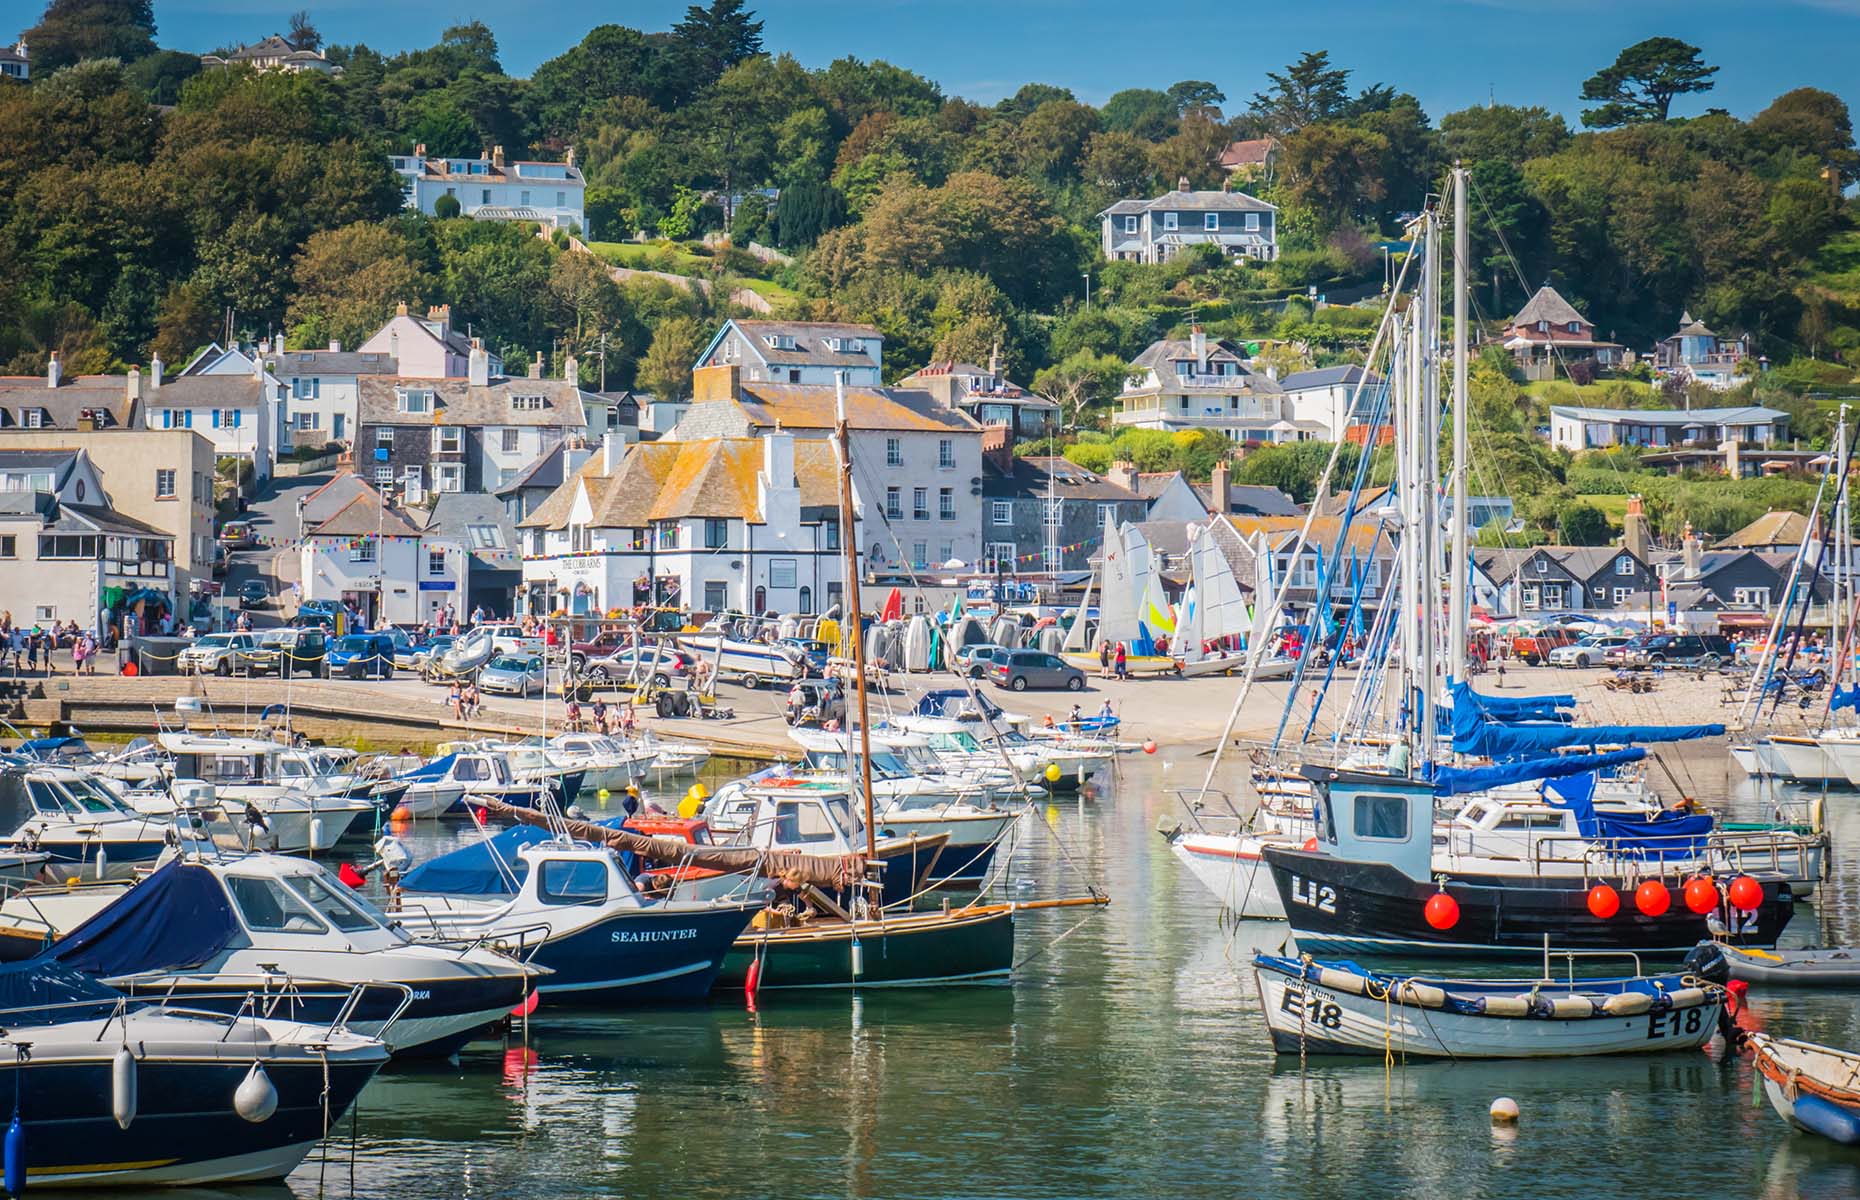 Lyme Regis (Vivvi Smak/Shutterstock)